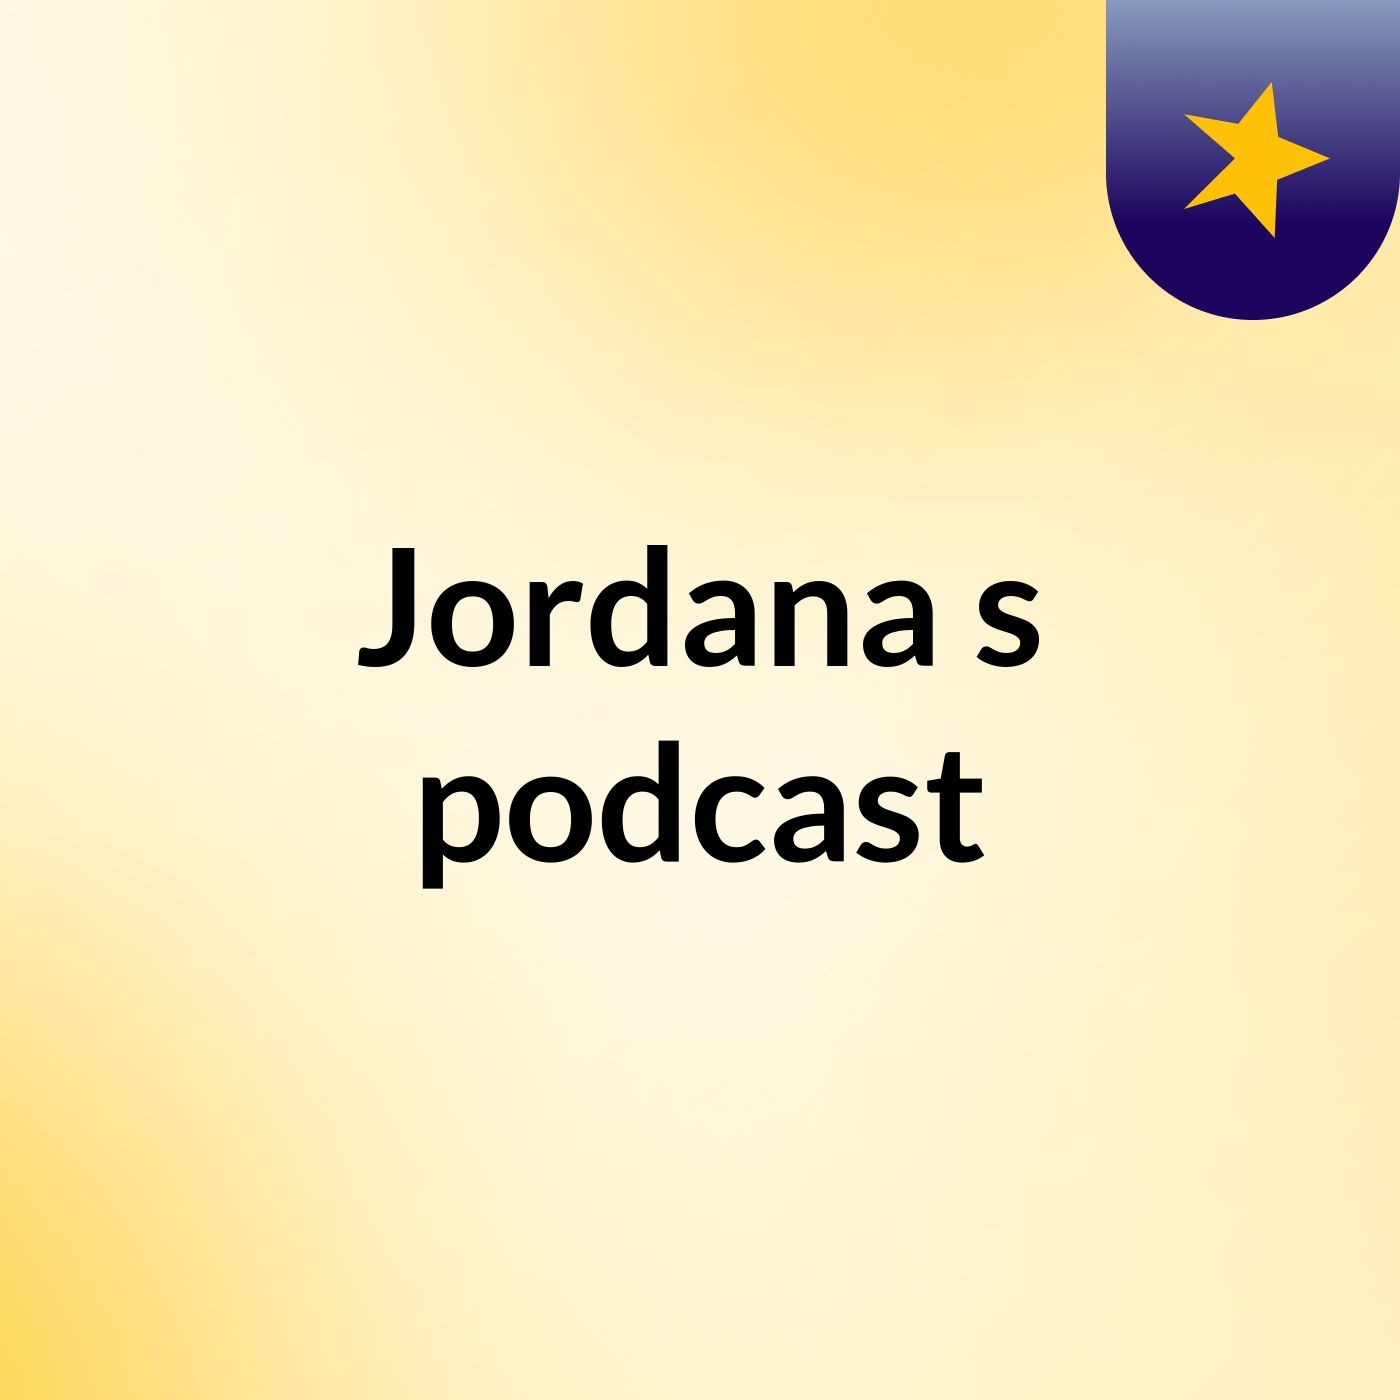 Jordana's podcast